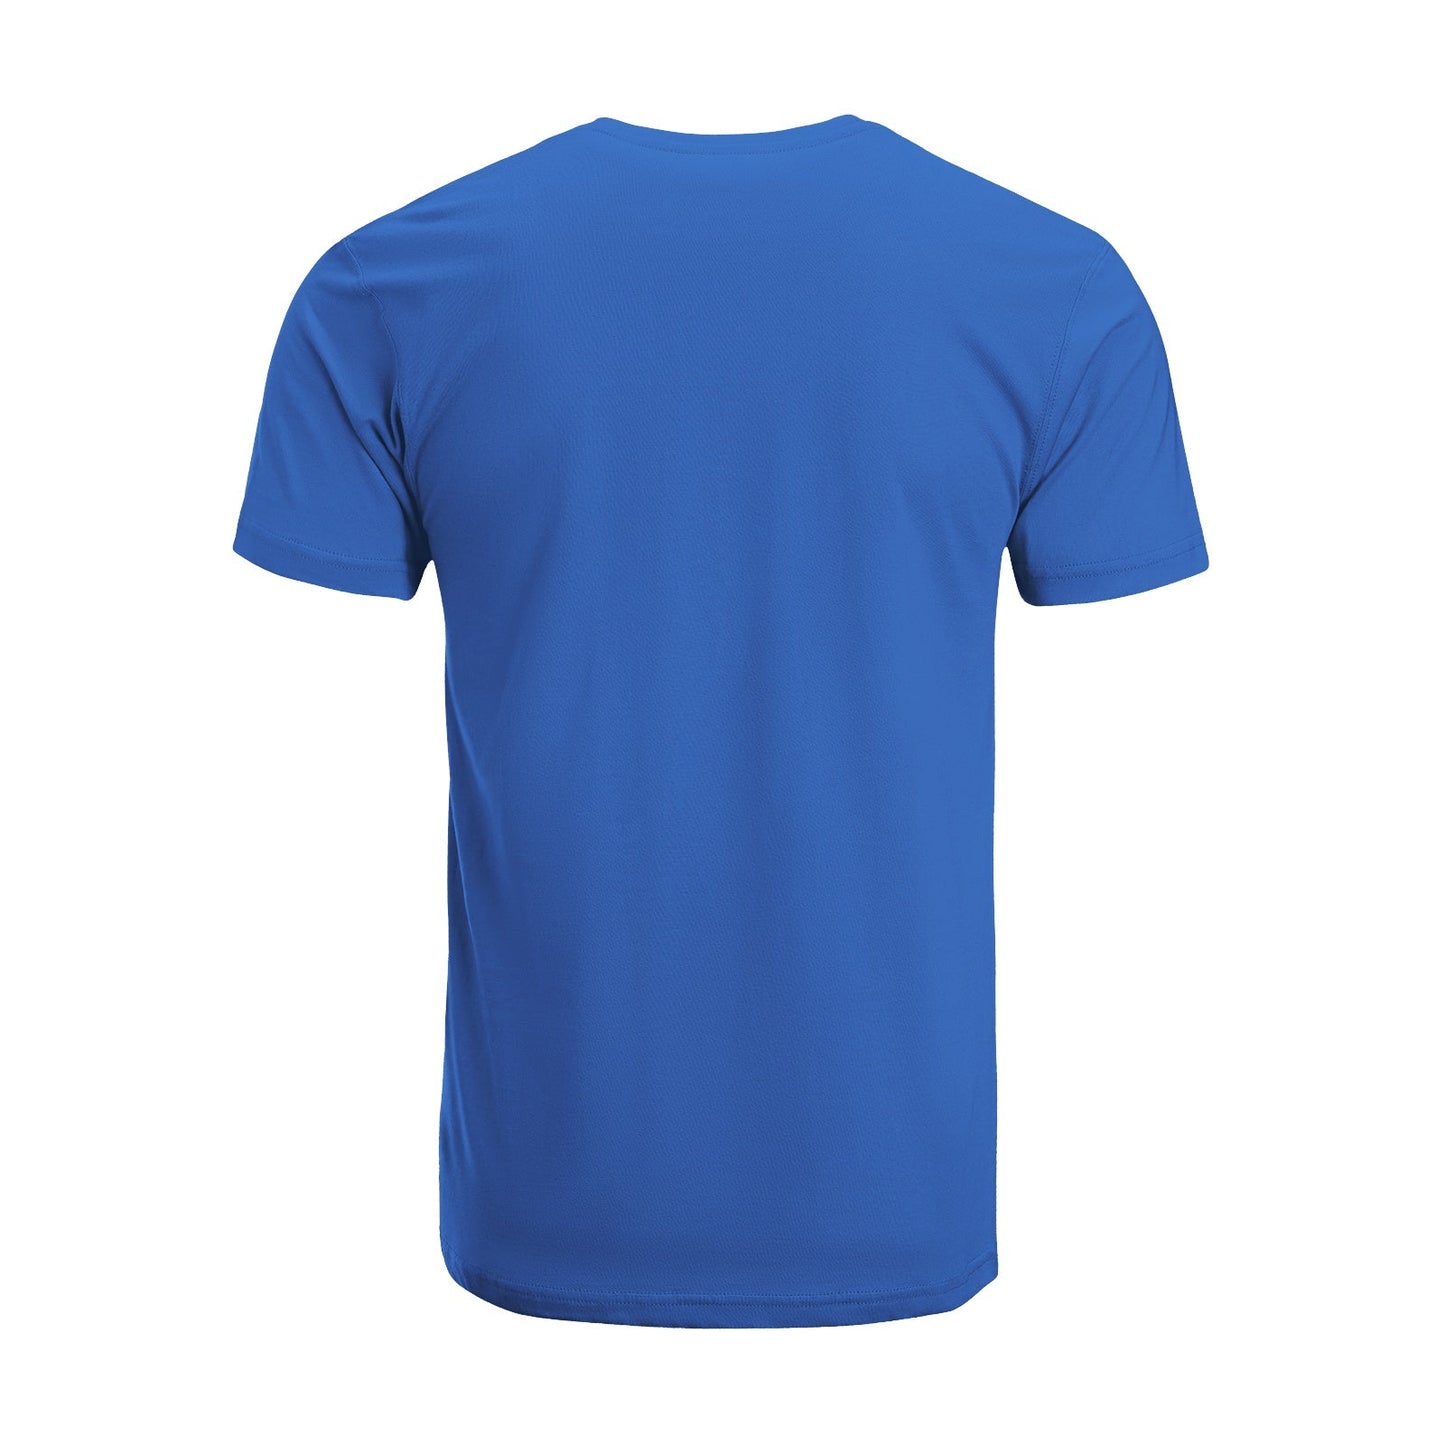 Unisex Short Sleeve Crew Neck Cotton Jersey T-Shirt USA 22